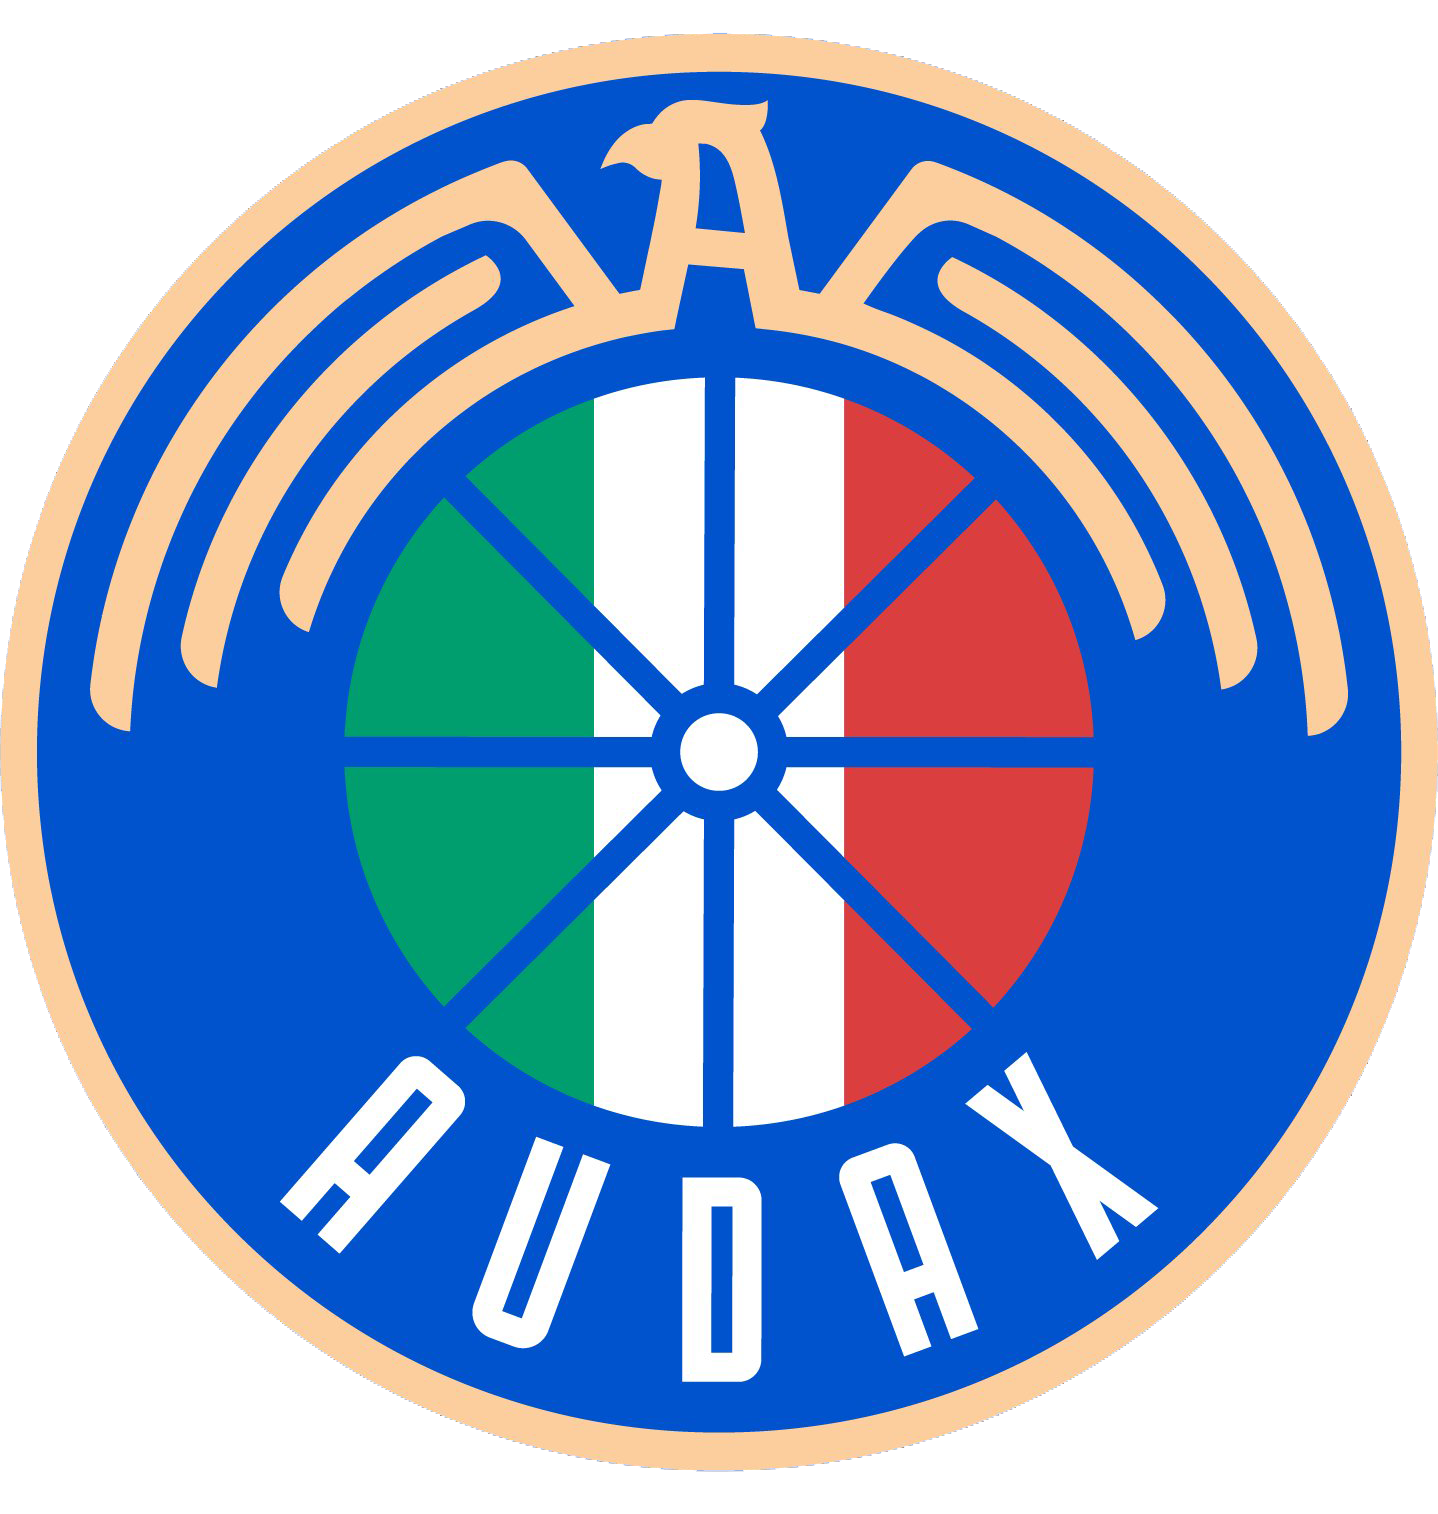 Audax Italiano U20